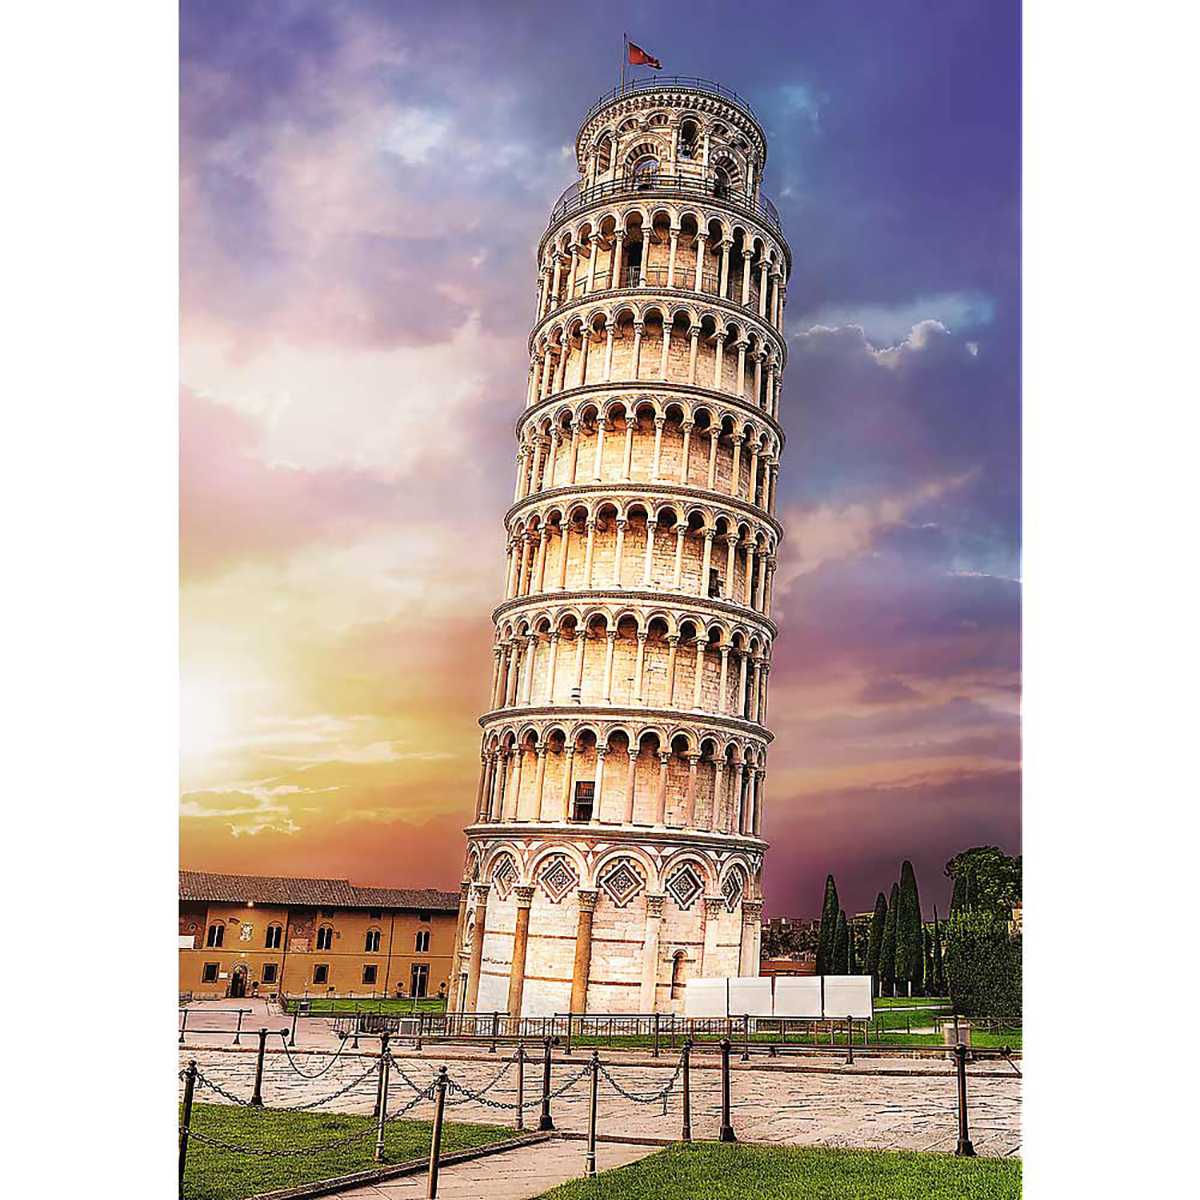 TREFL Schiefer Puzzle Pisa Turm von